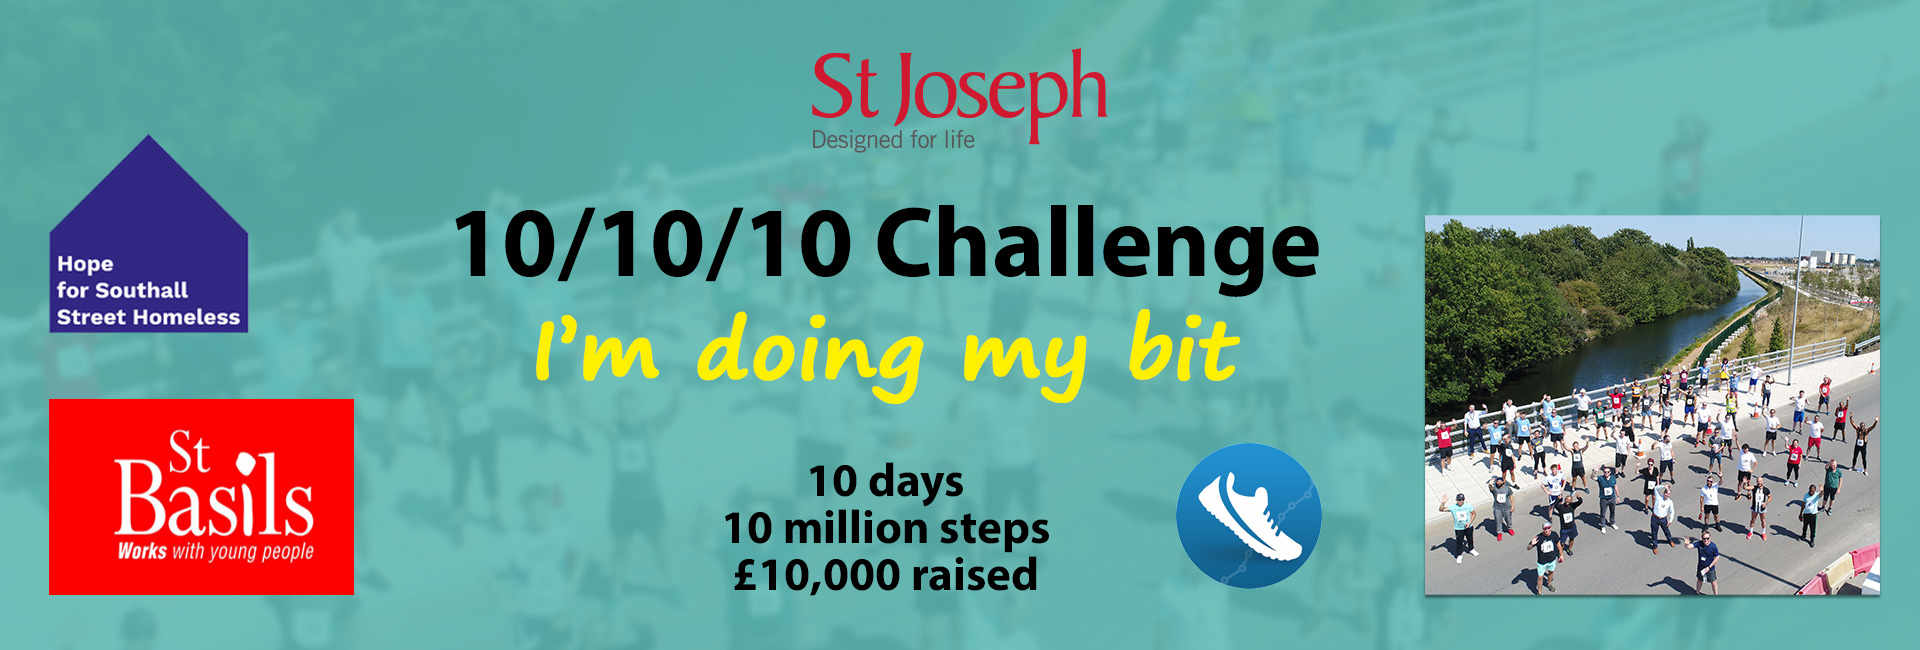 St Joseph 10 10 10 Challenge